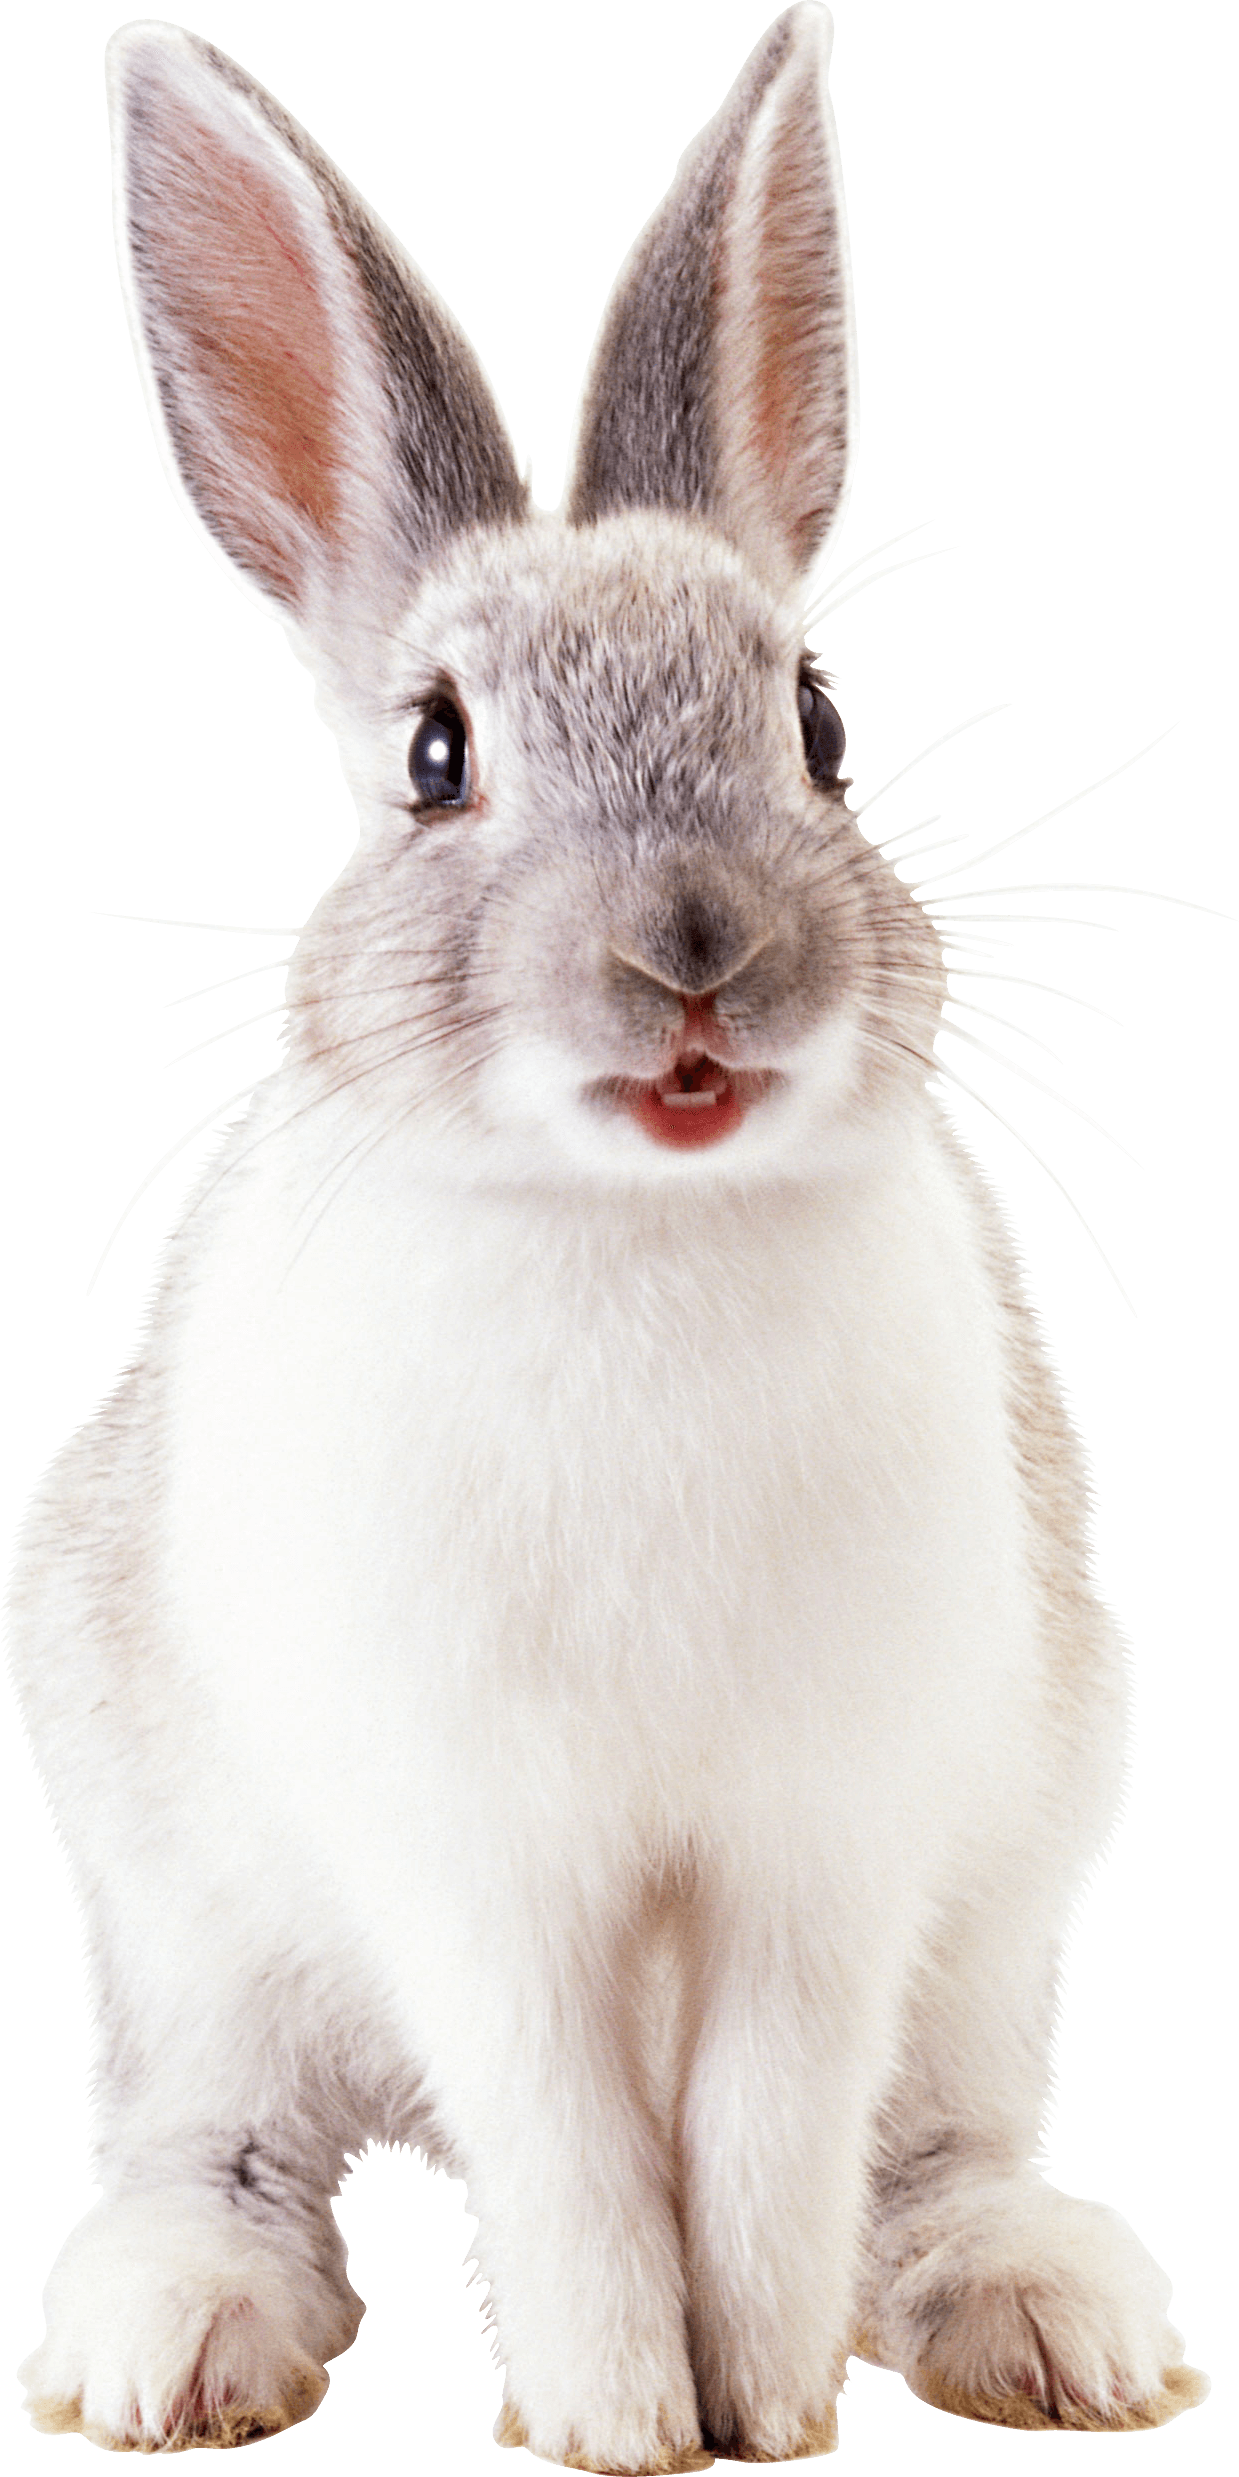 white cute rabbit PNG Image - PurePNG | Free transparent CC0 PNG Image ...